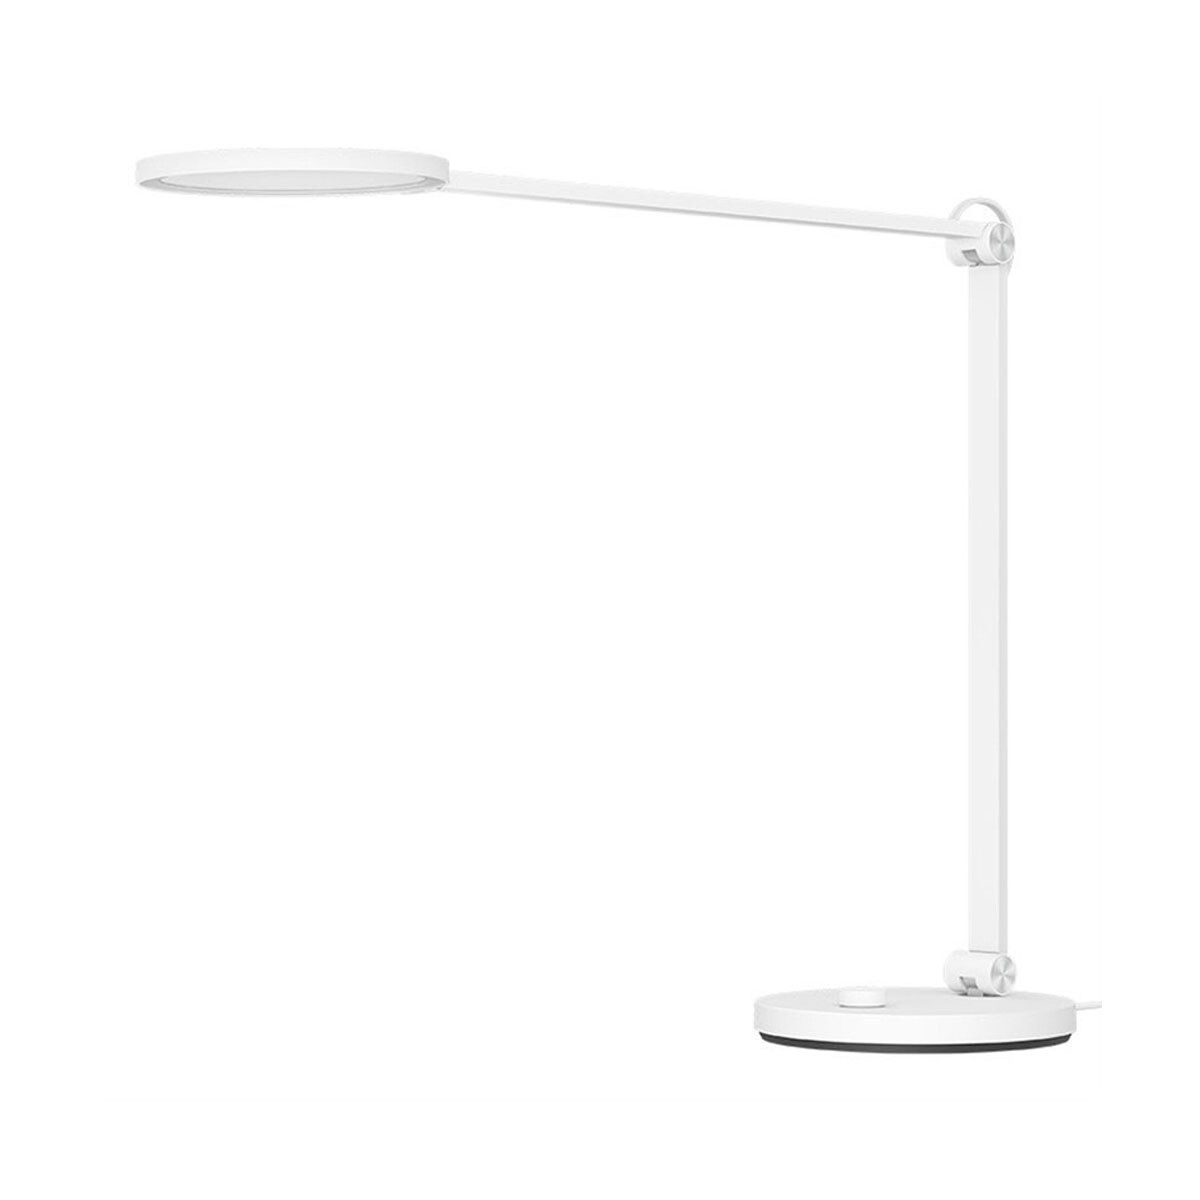 Mi smart led desk lamp pro xiaomi Blanca